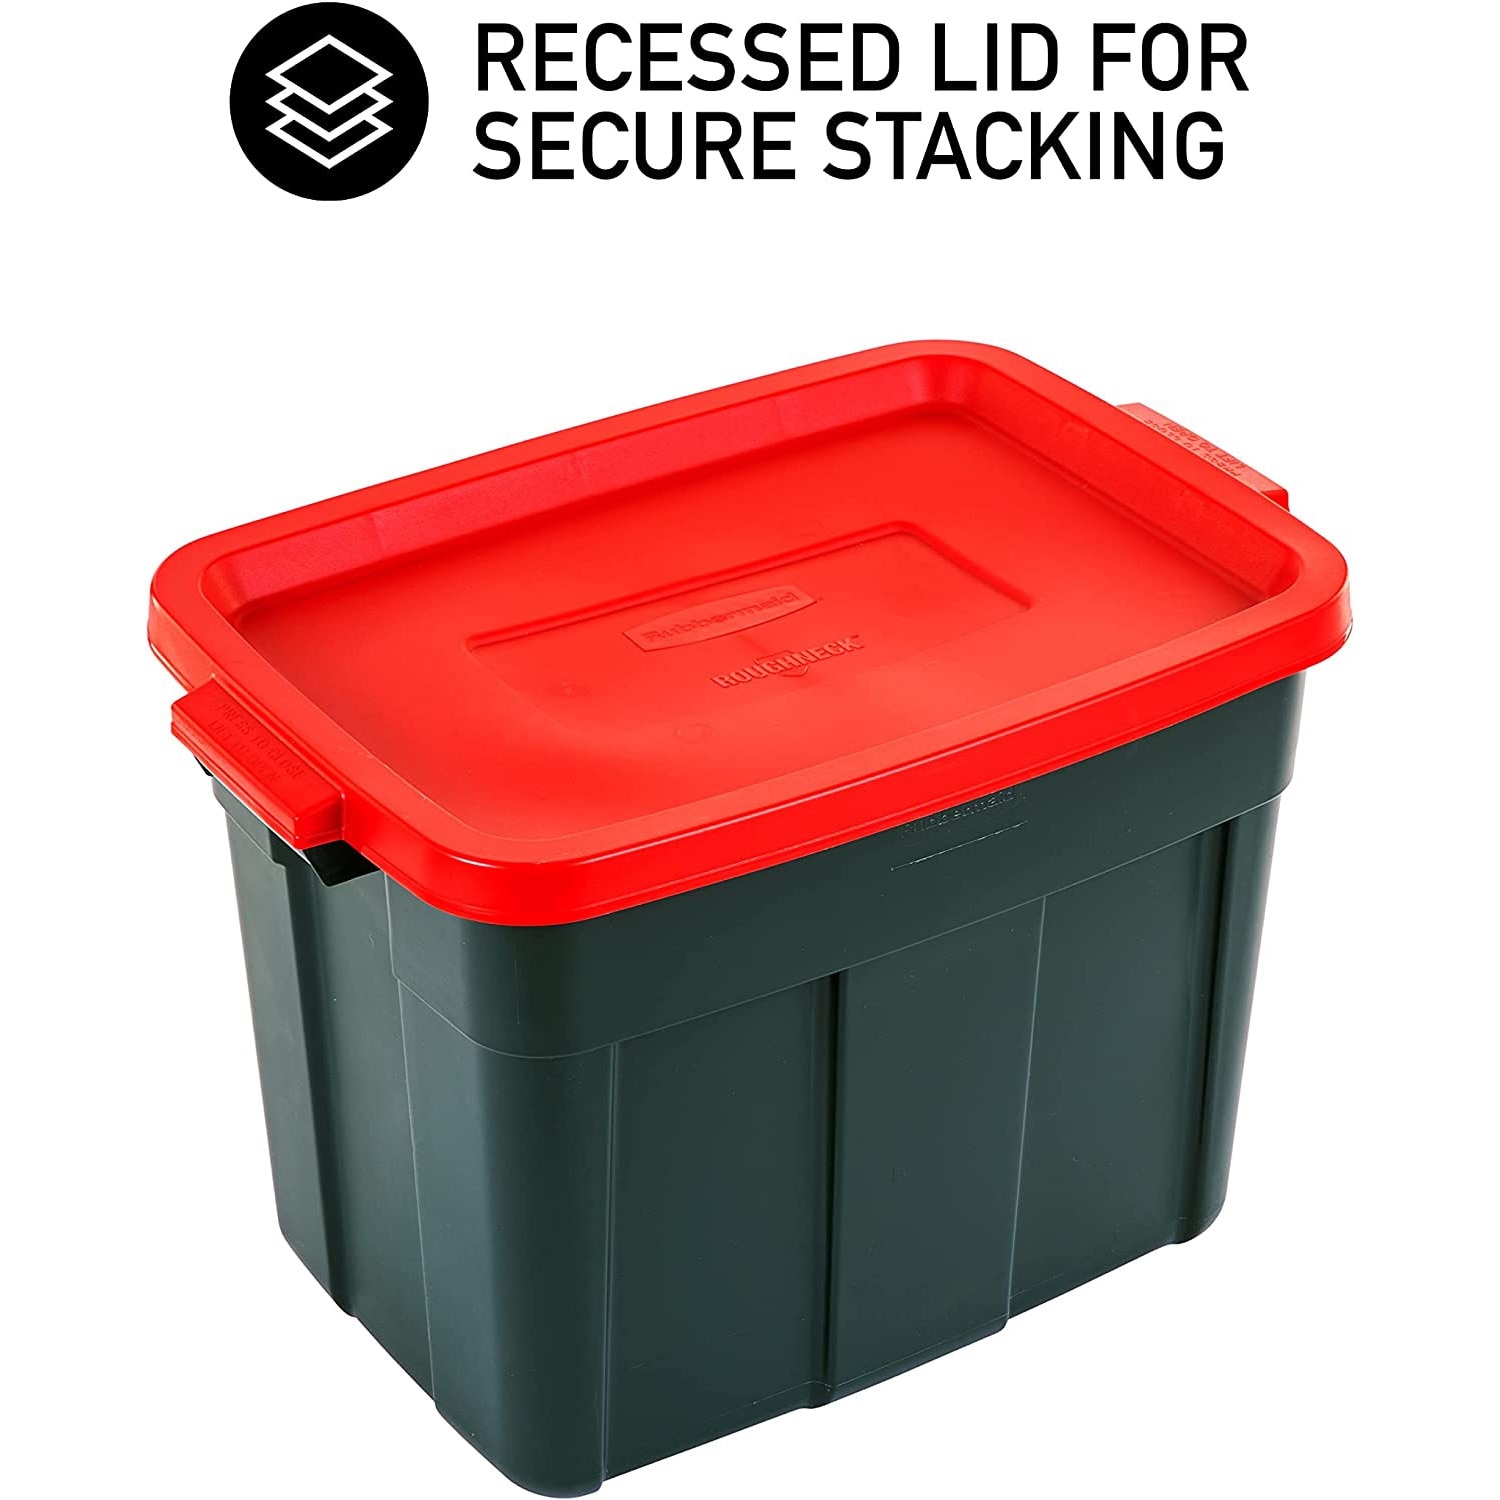 Red Small Plastic Storage Bin 6 Pack